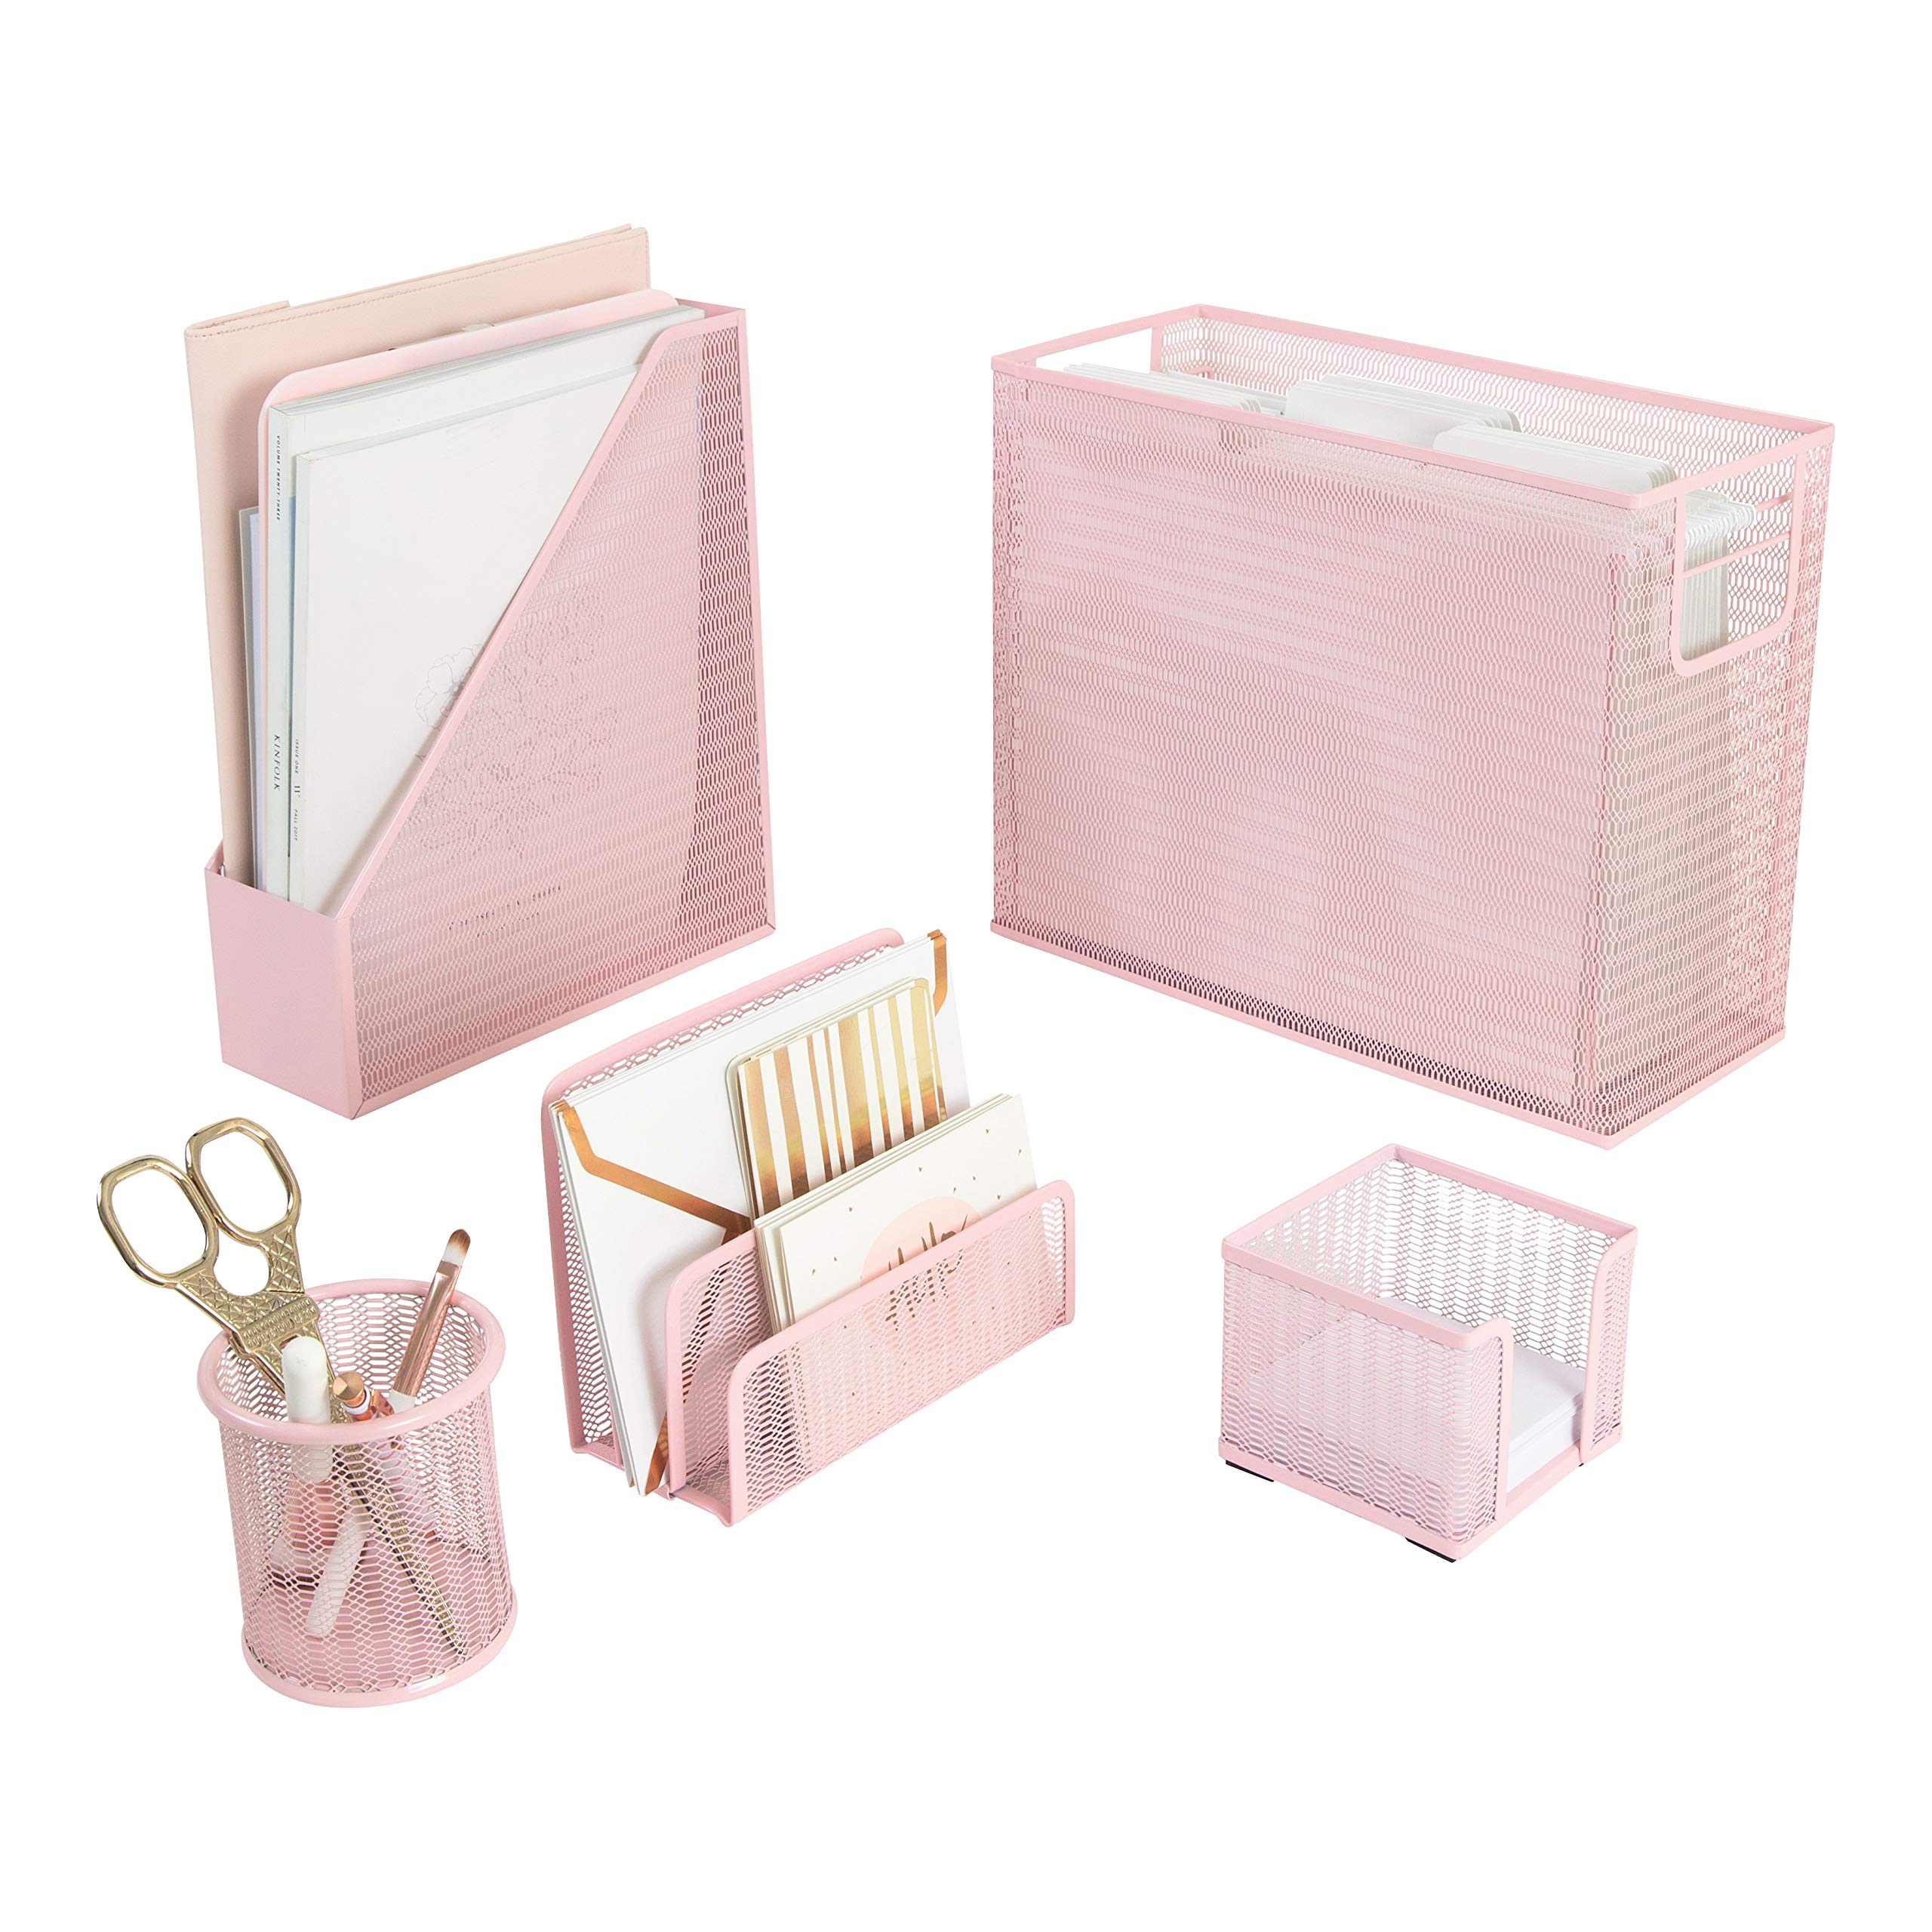 Mua Blu Monaco 5 Piece Office Supplies Pink Desk Organizer Set - with  Desktop Hanging File Organizer, Magazine Holder, Pen Cup, Sticky Note  Holder, Letter sorter - Pink Desk Accessories for Women